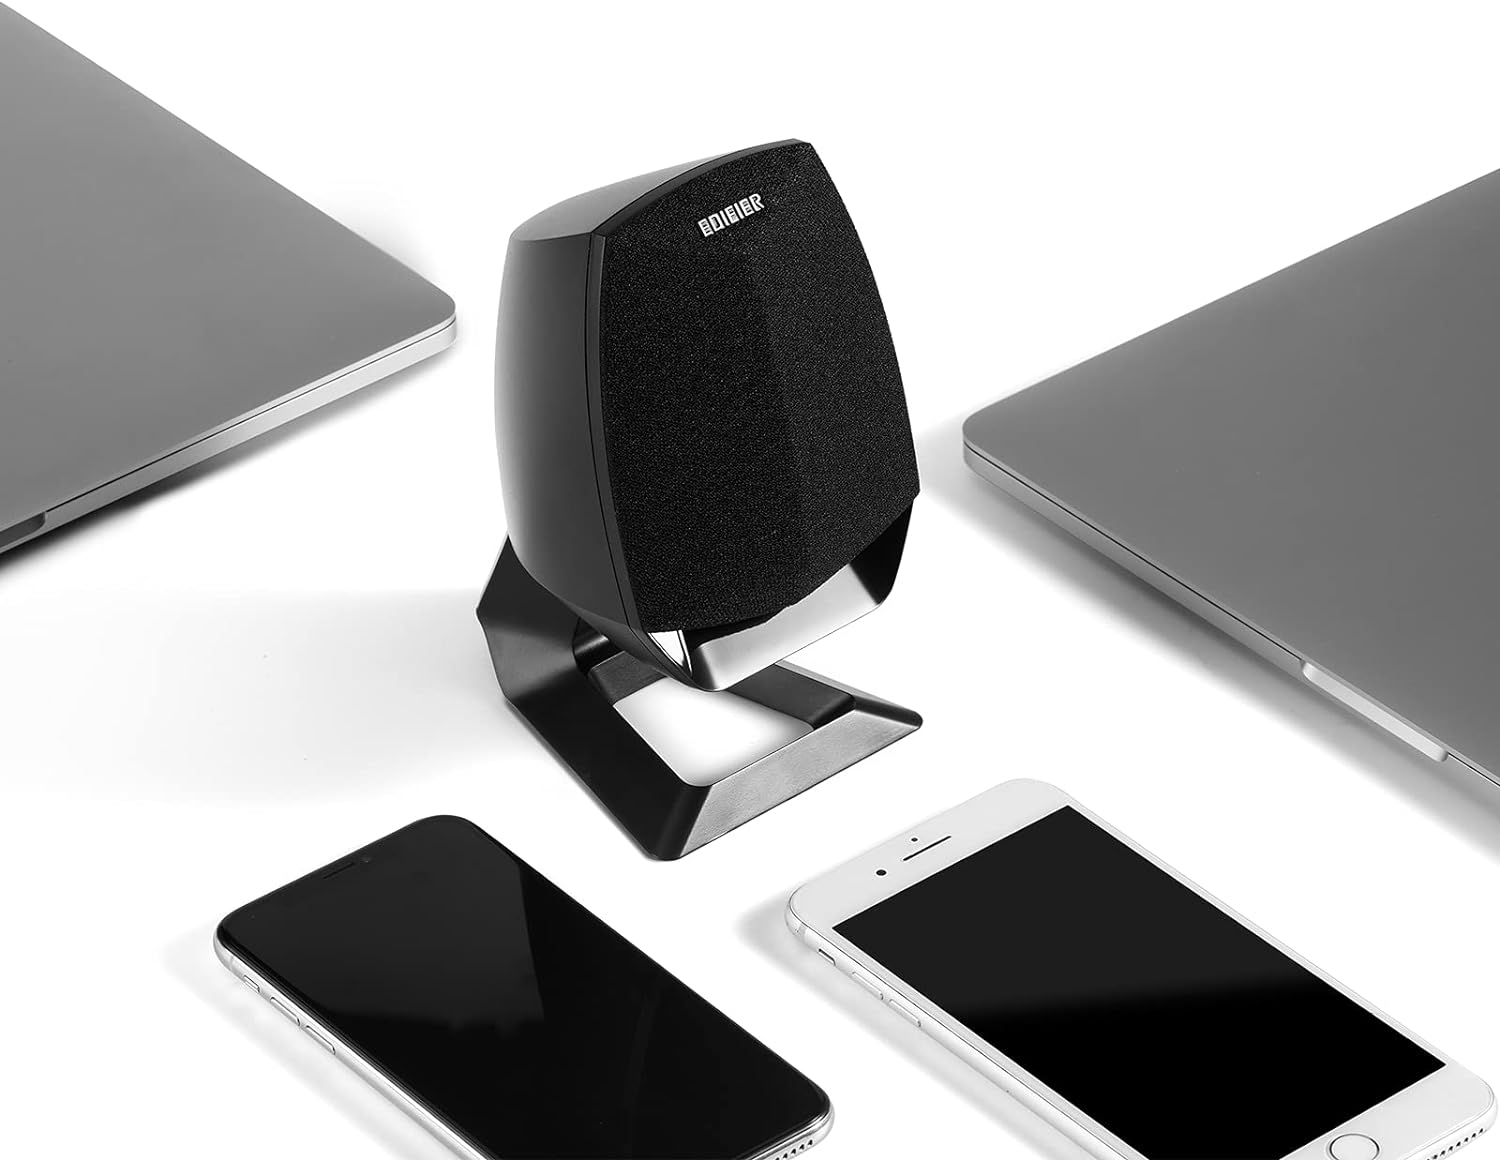 اسپیکر بلوتوثی رومیزی ادیفایر مدل Bluetooth Desktop Speaker Edifier M 201 BT